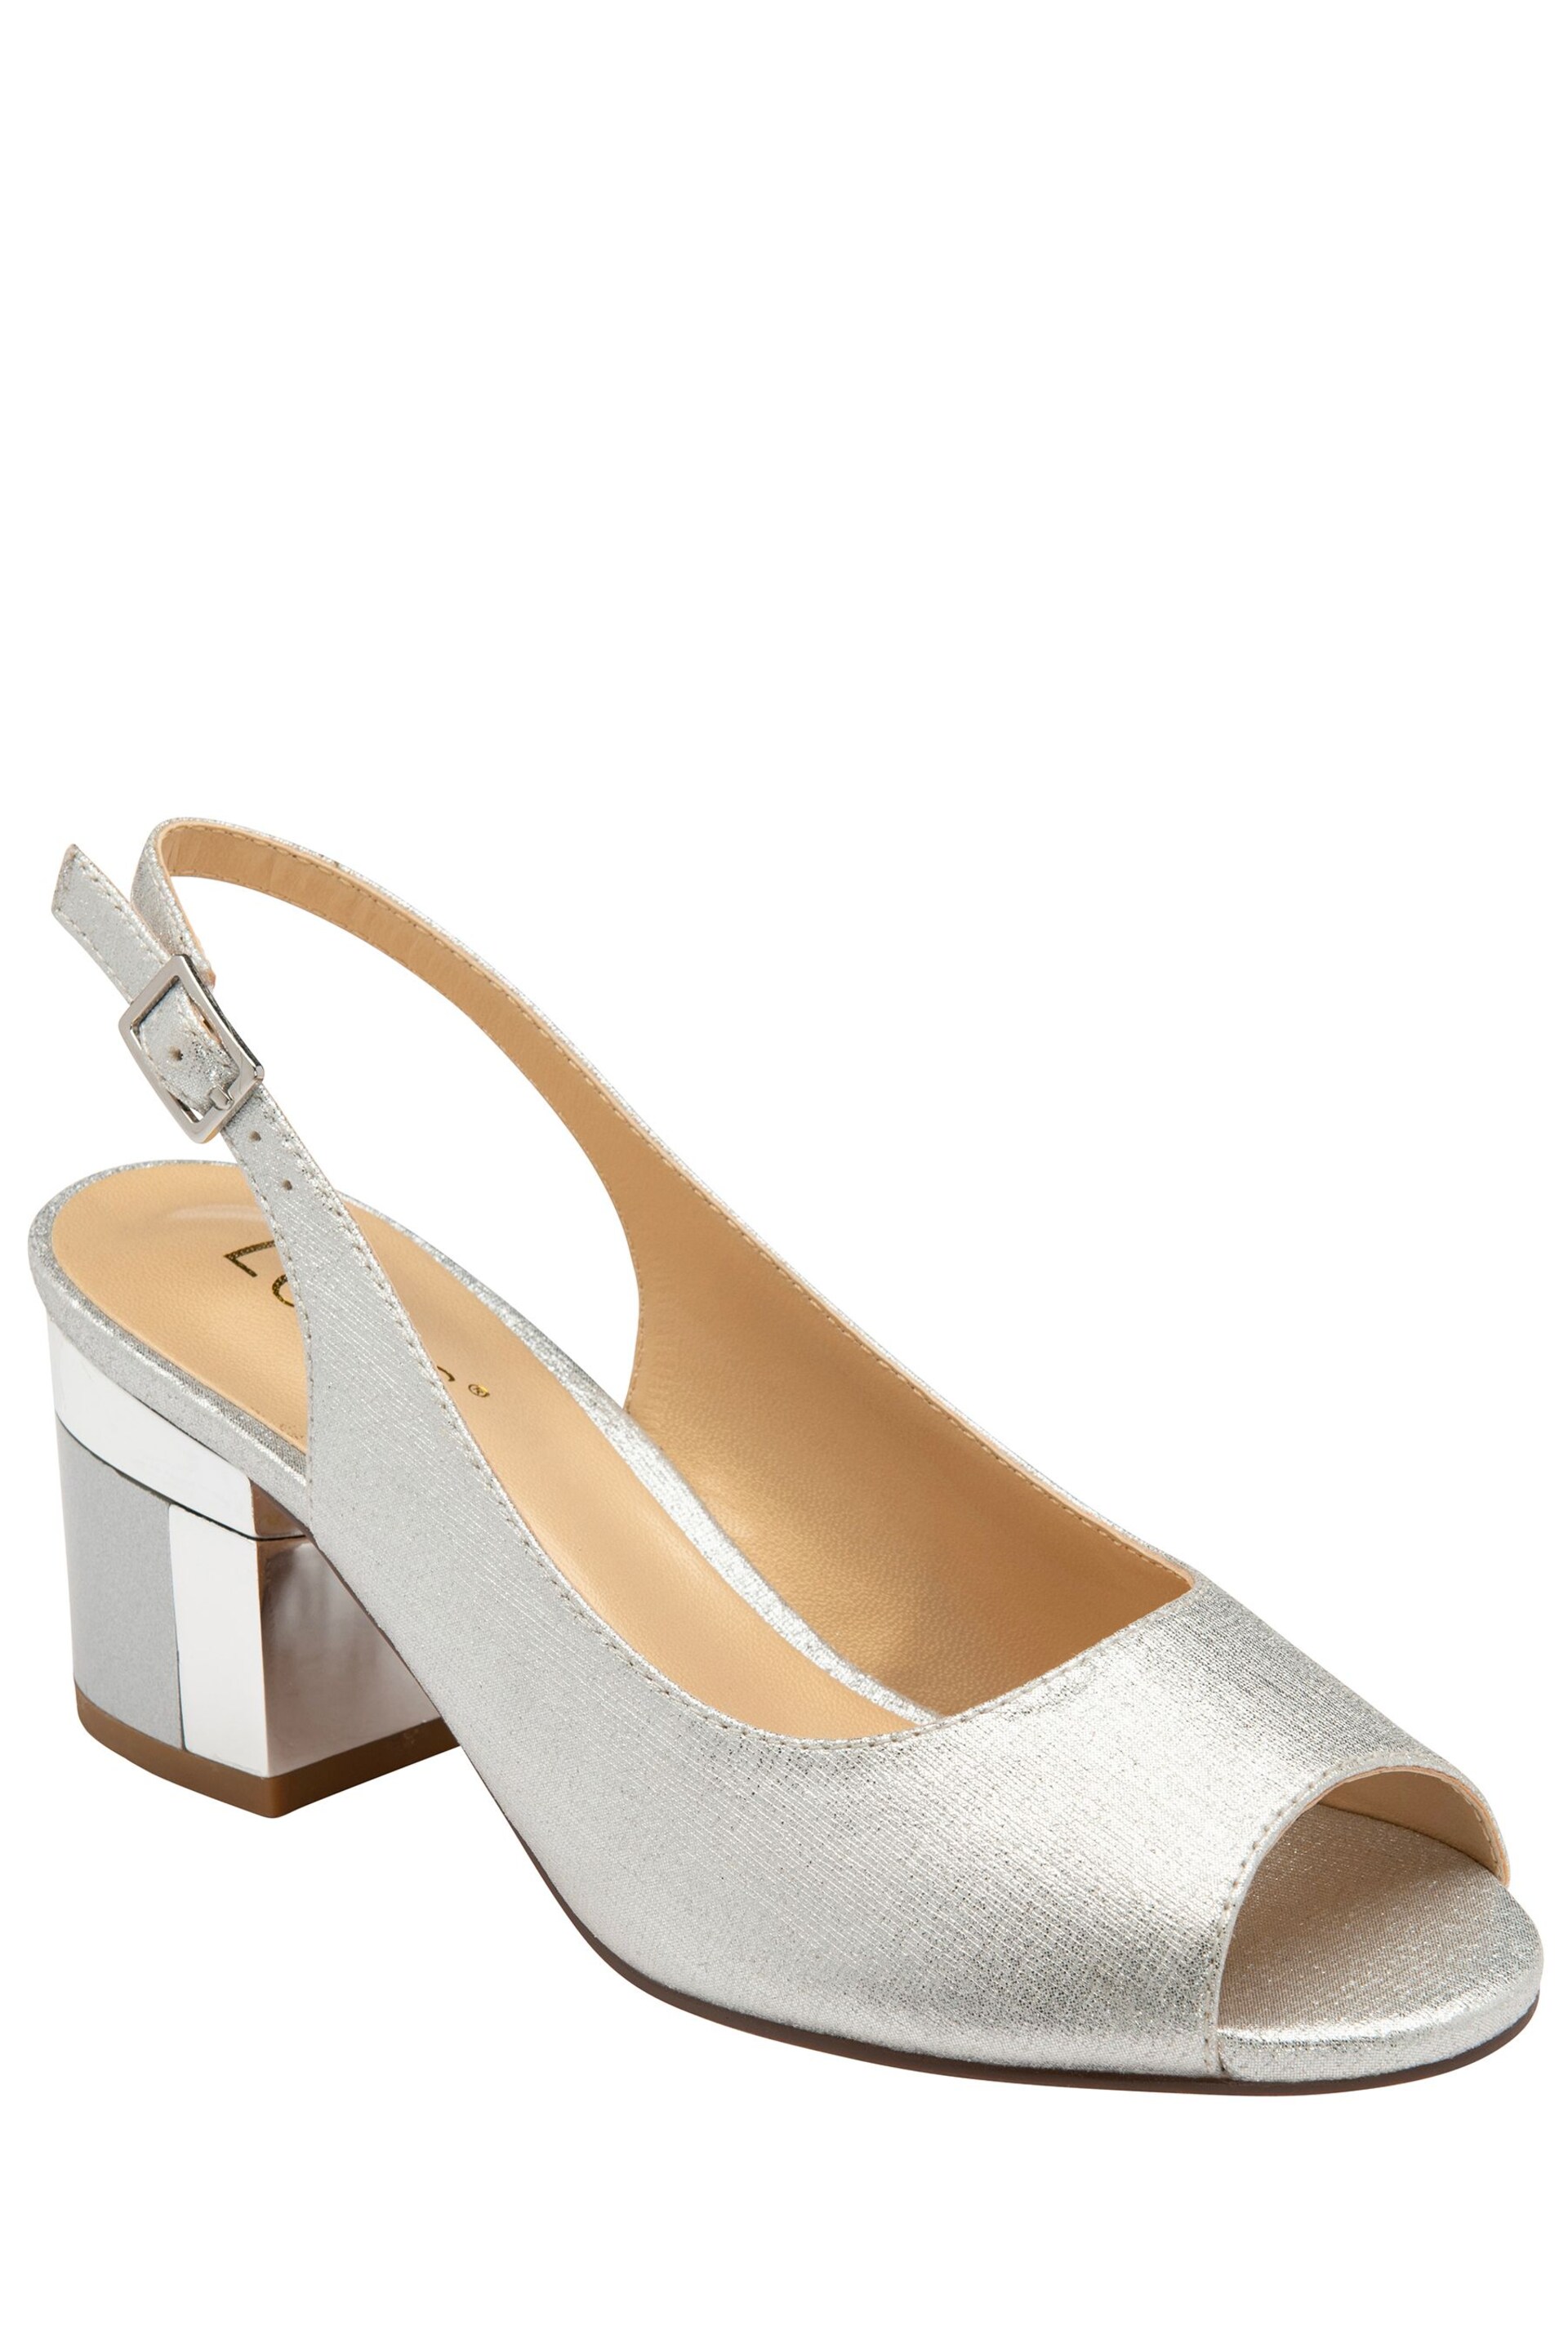 Lotus Silver Slingback Block-Heel Shoes - Image 1 of 4